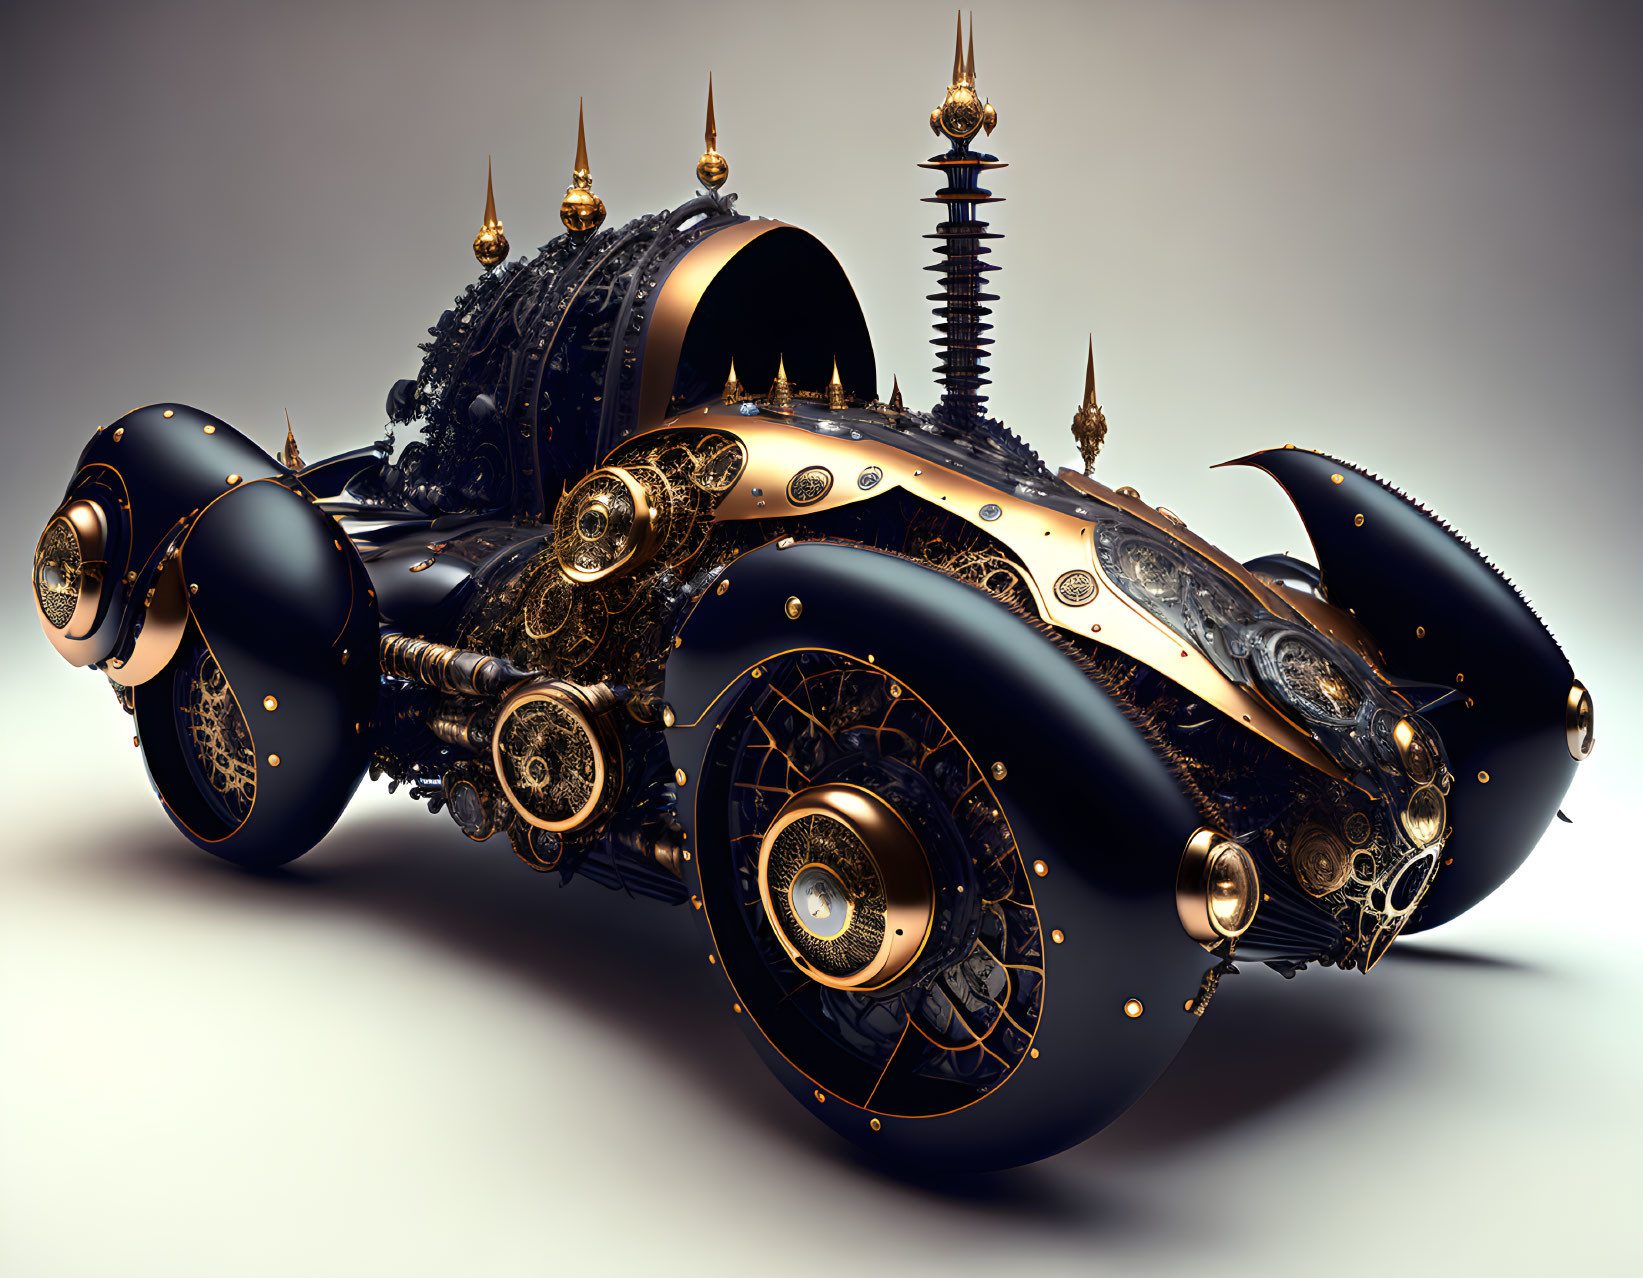 Intricate steampunk vehicle with golden gears and dark metallic design